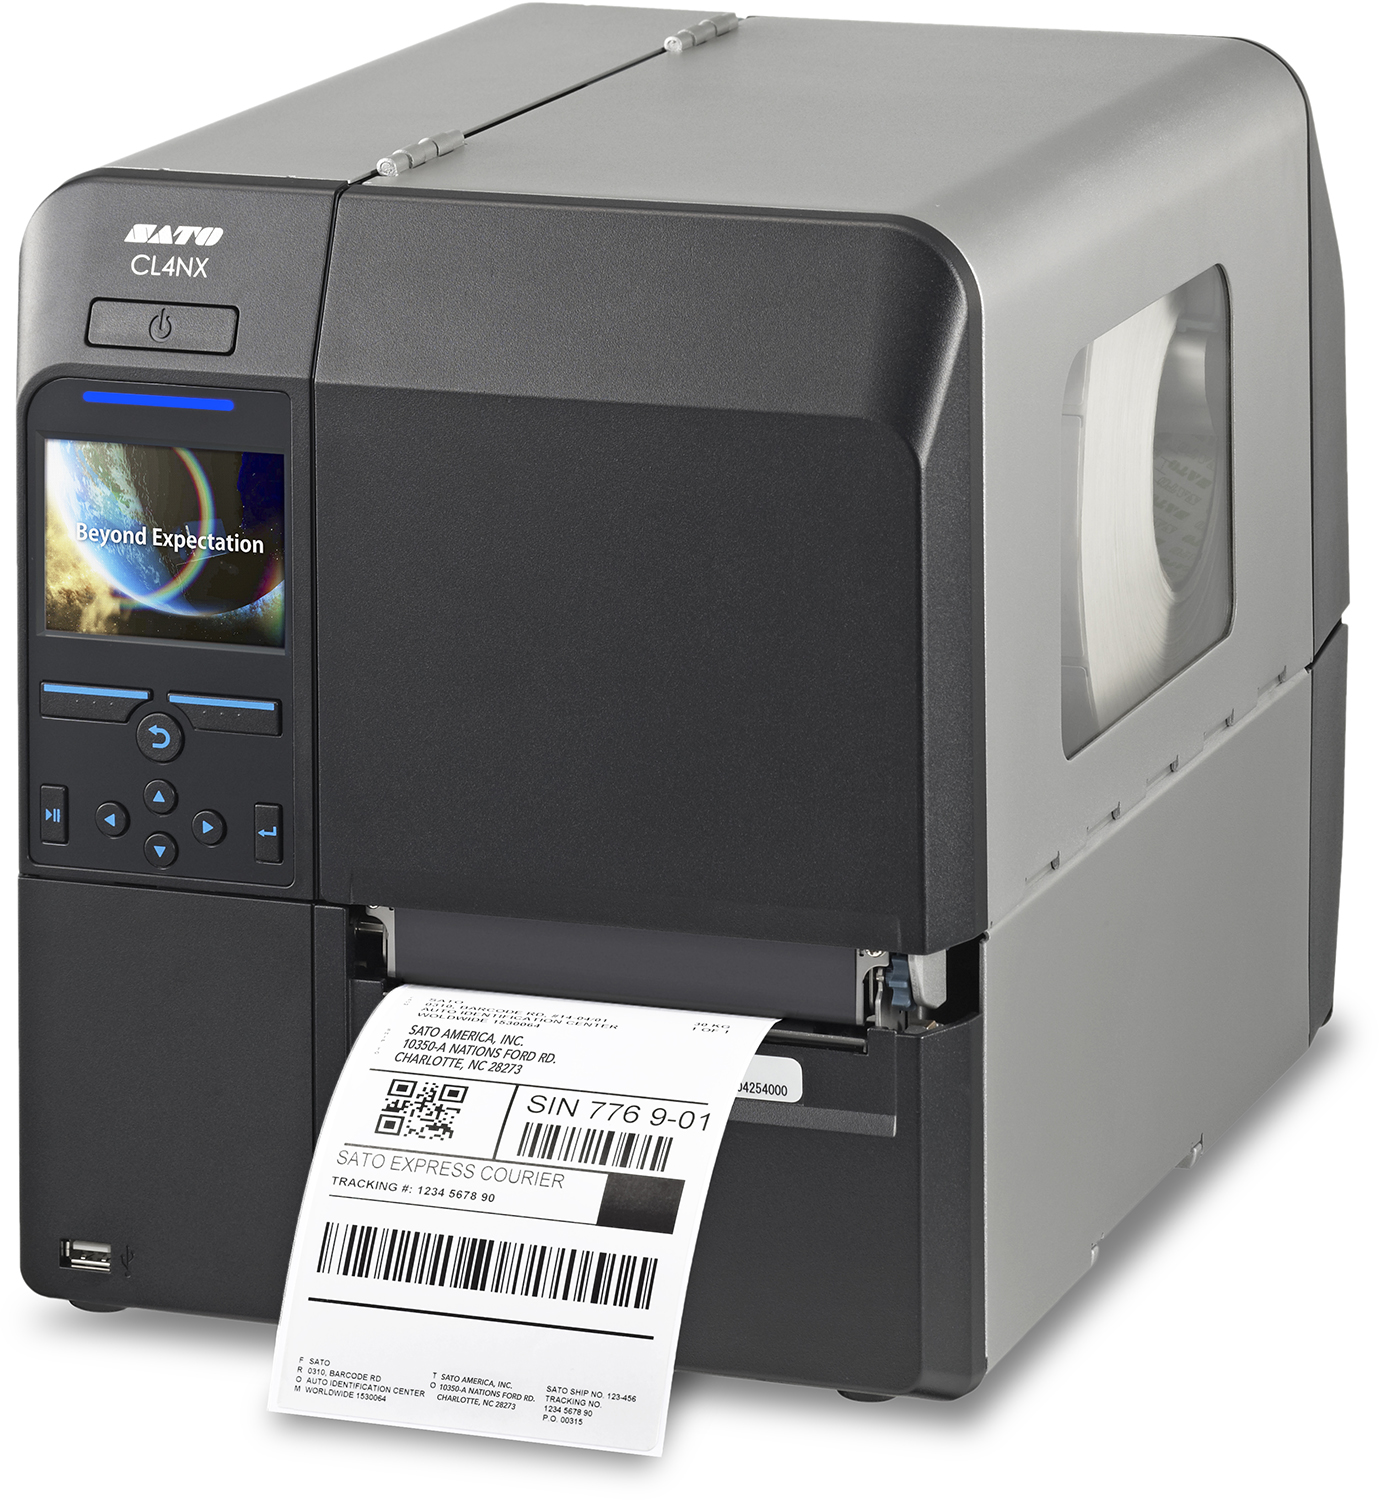 Sato CL4NX Plus Series Printers